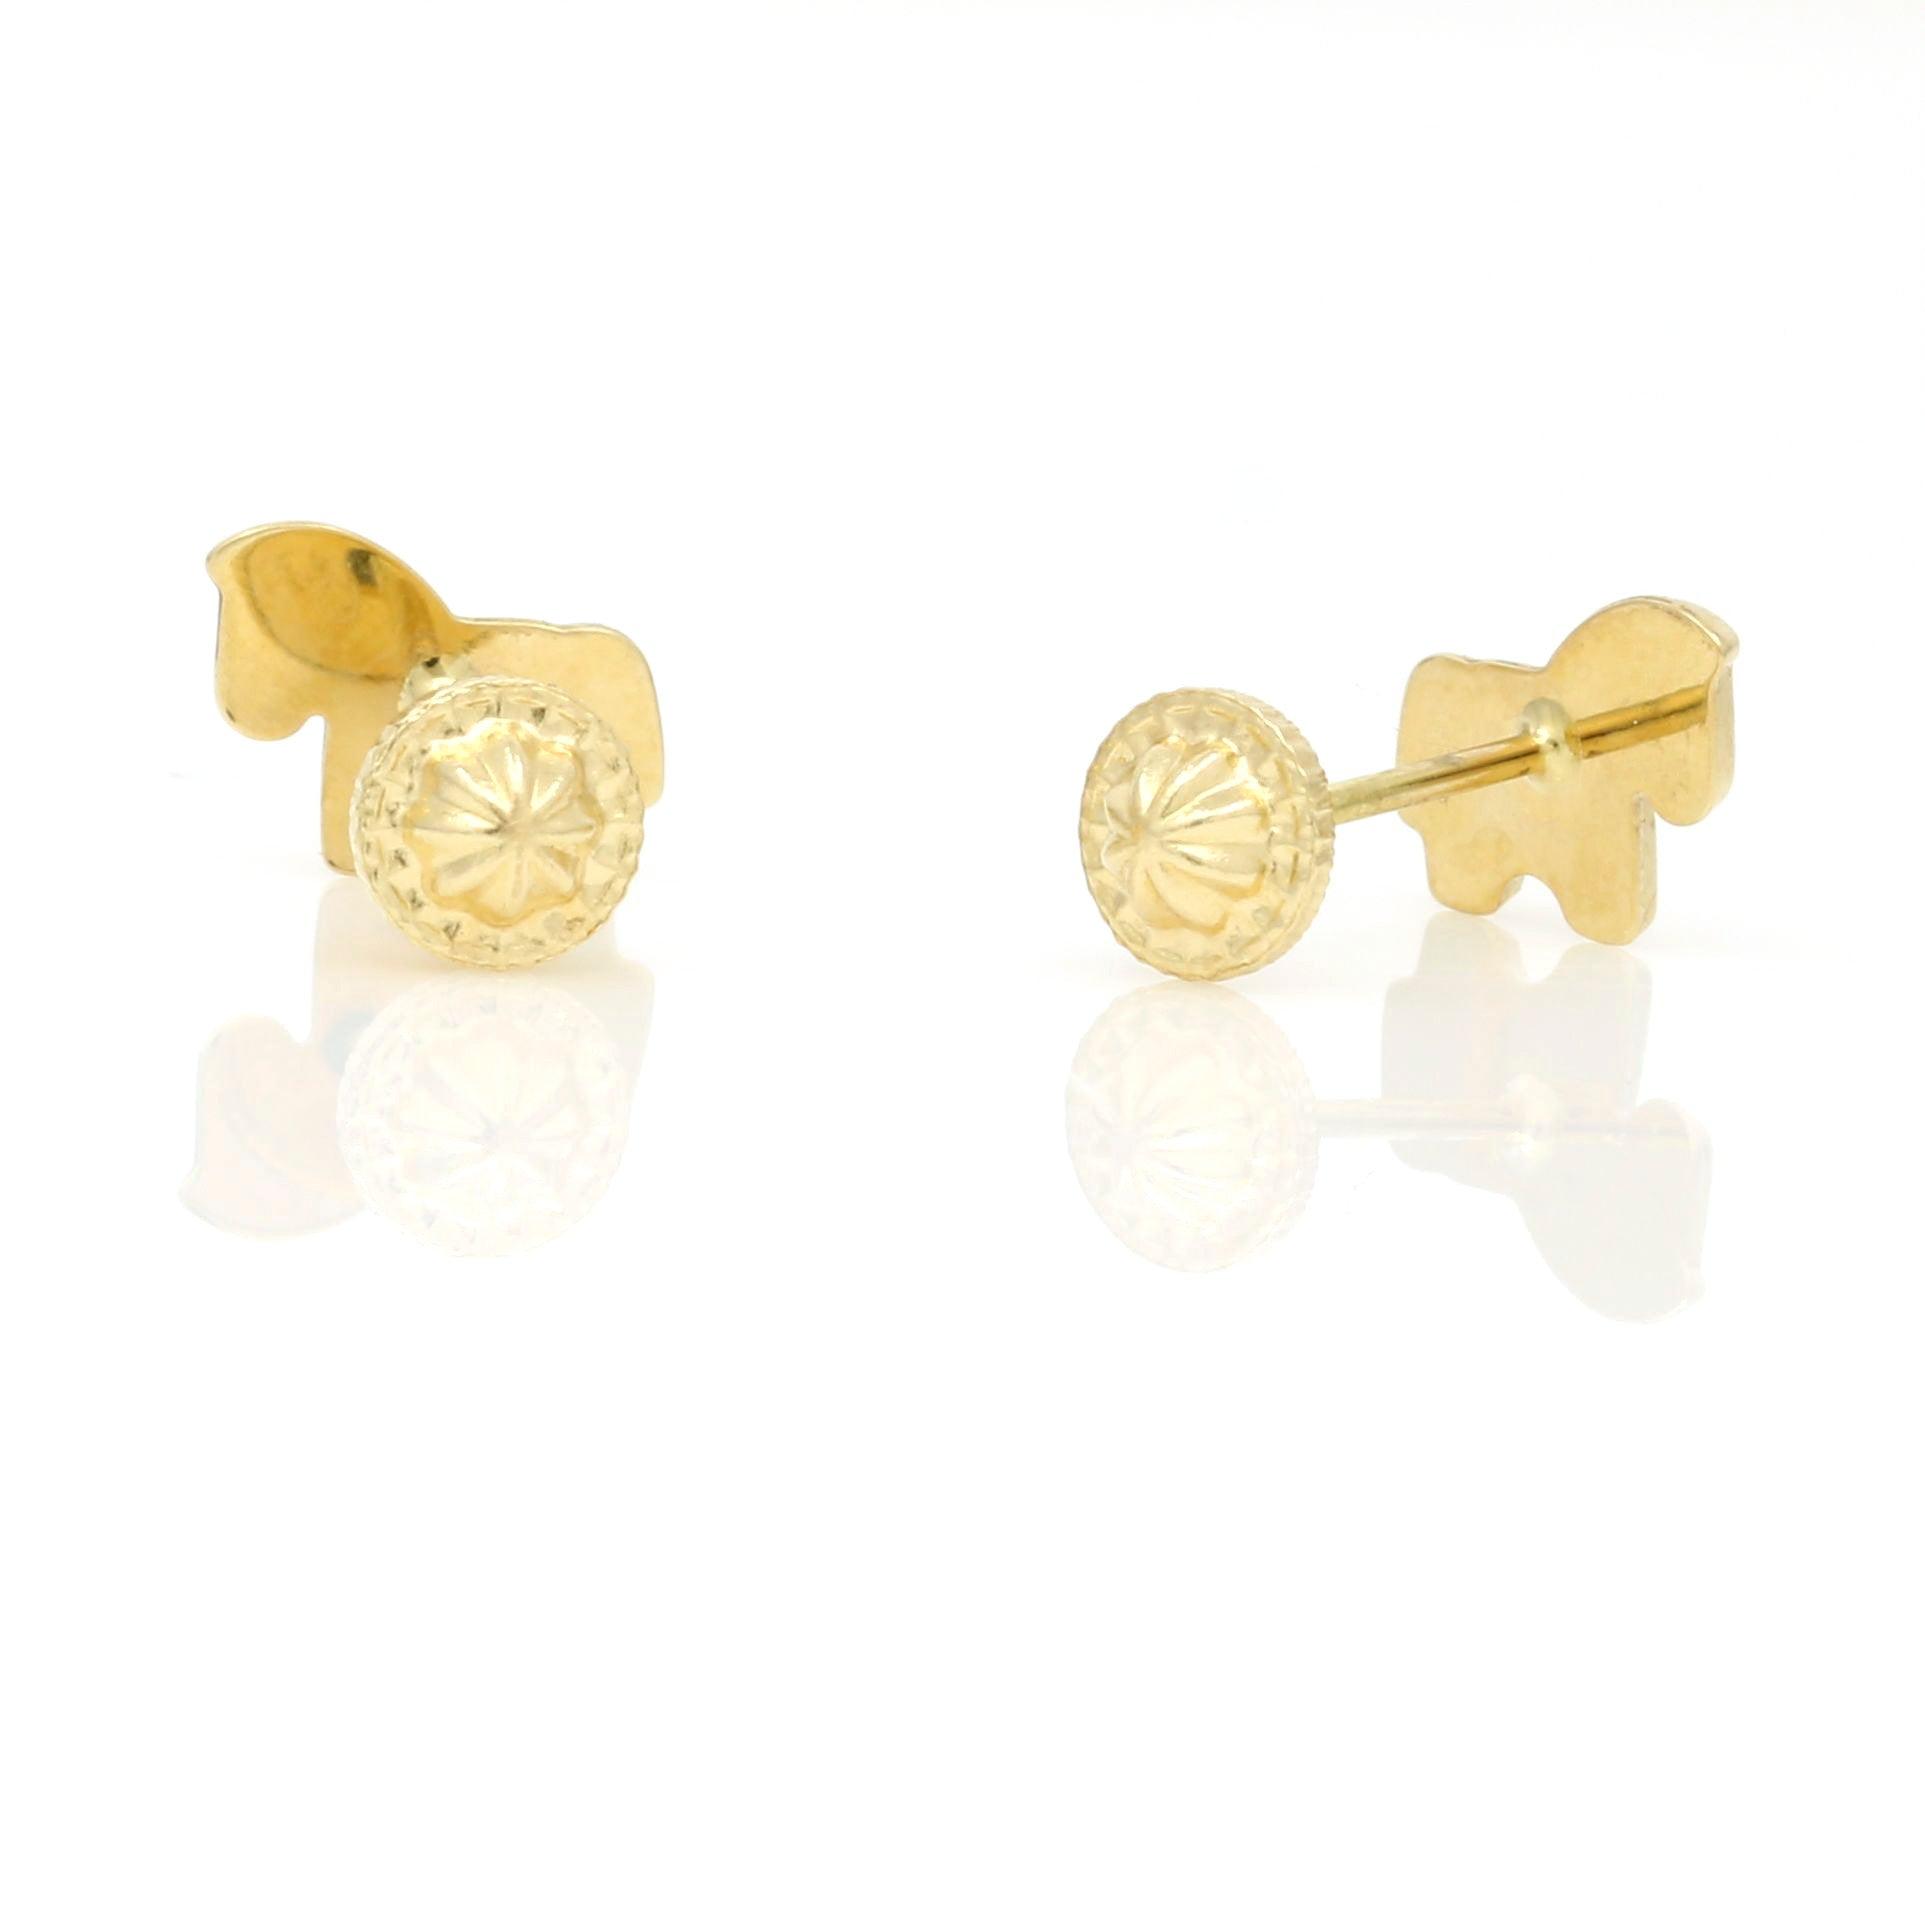 Horse Stud Earrings in 18k Yellow Gold Children's Jewelry - 31 Jewels Inc.